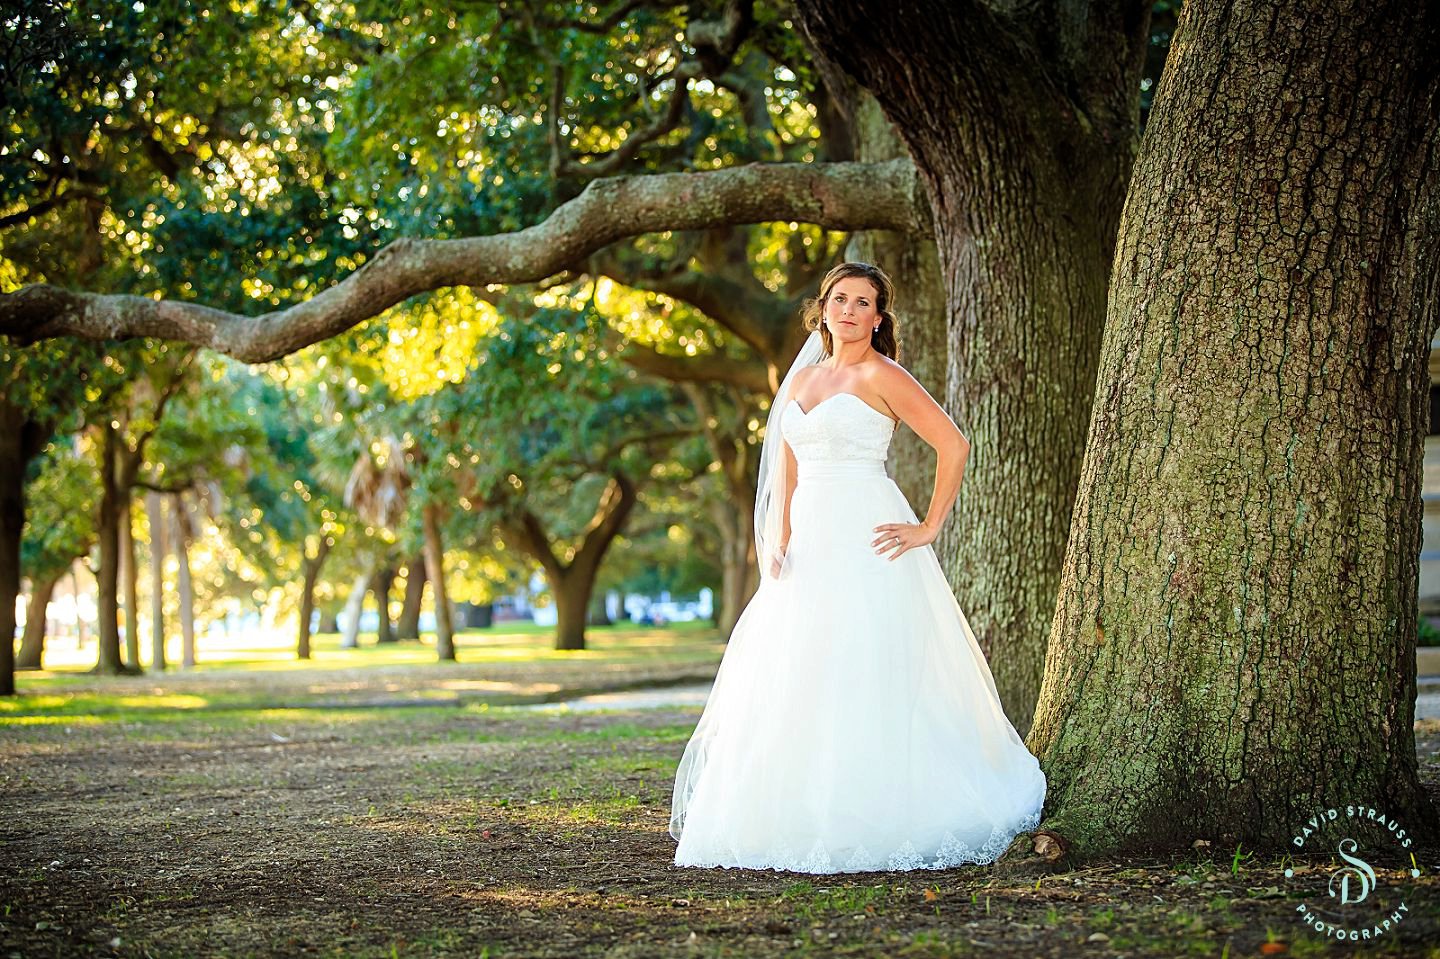 Bridal photos - Holly - David Strauss Photography